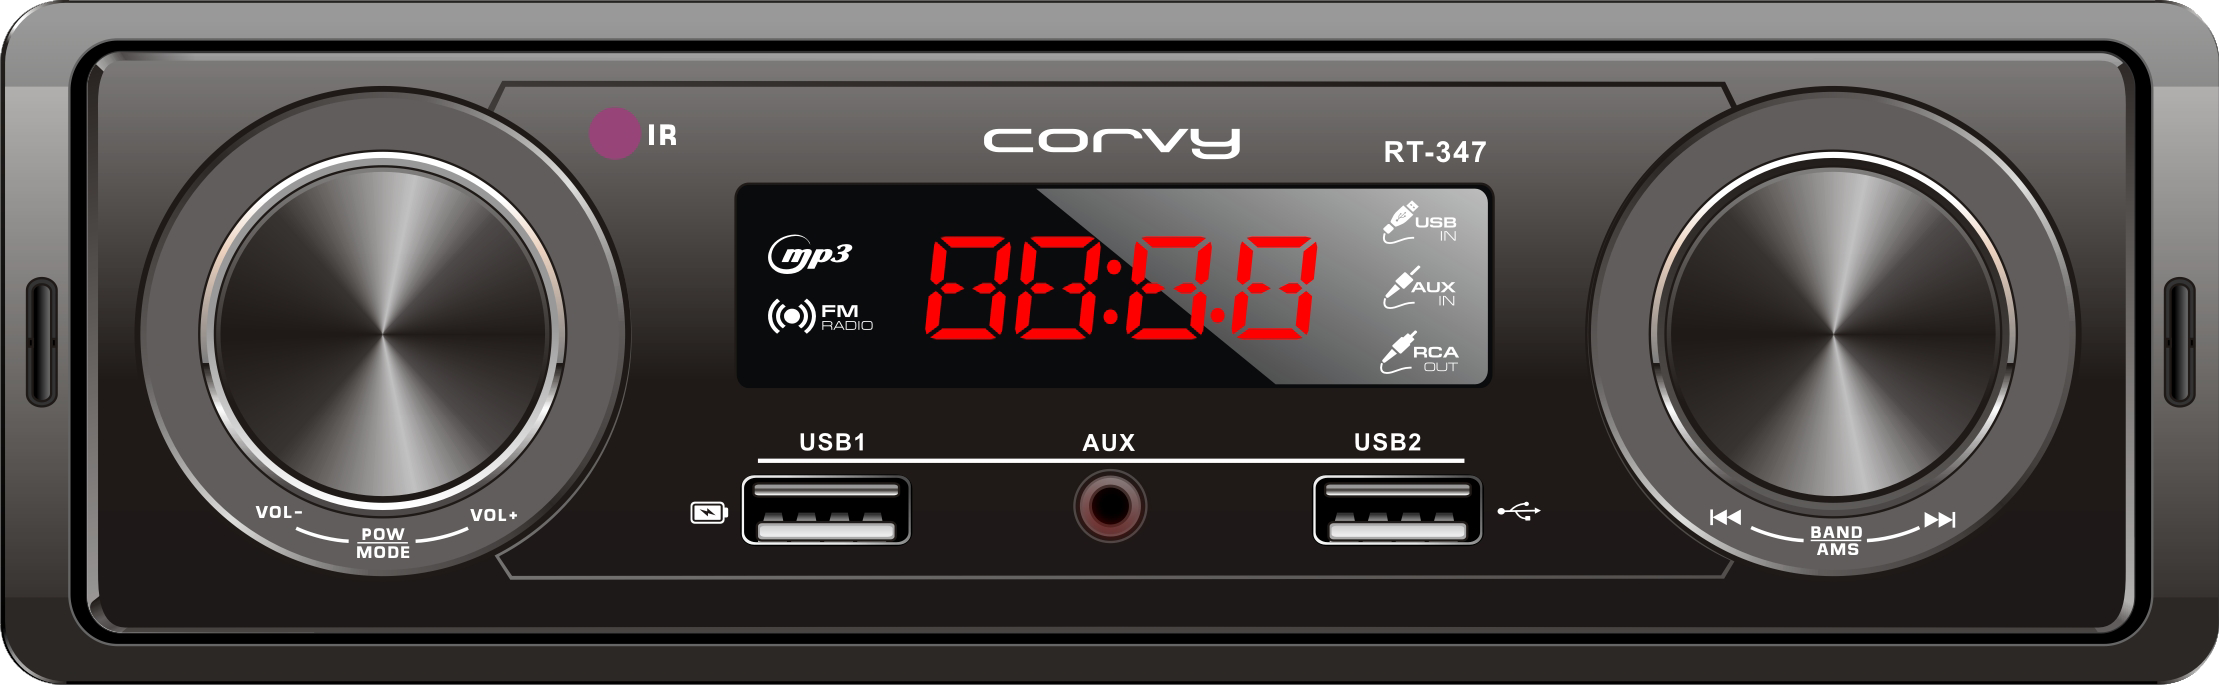 Reproductor MP3 con dos puertos USB 018056 Corvy RT-347